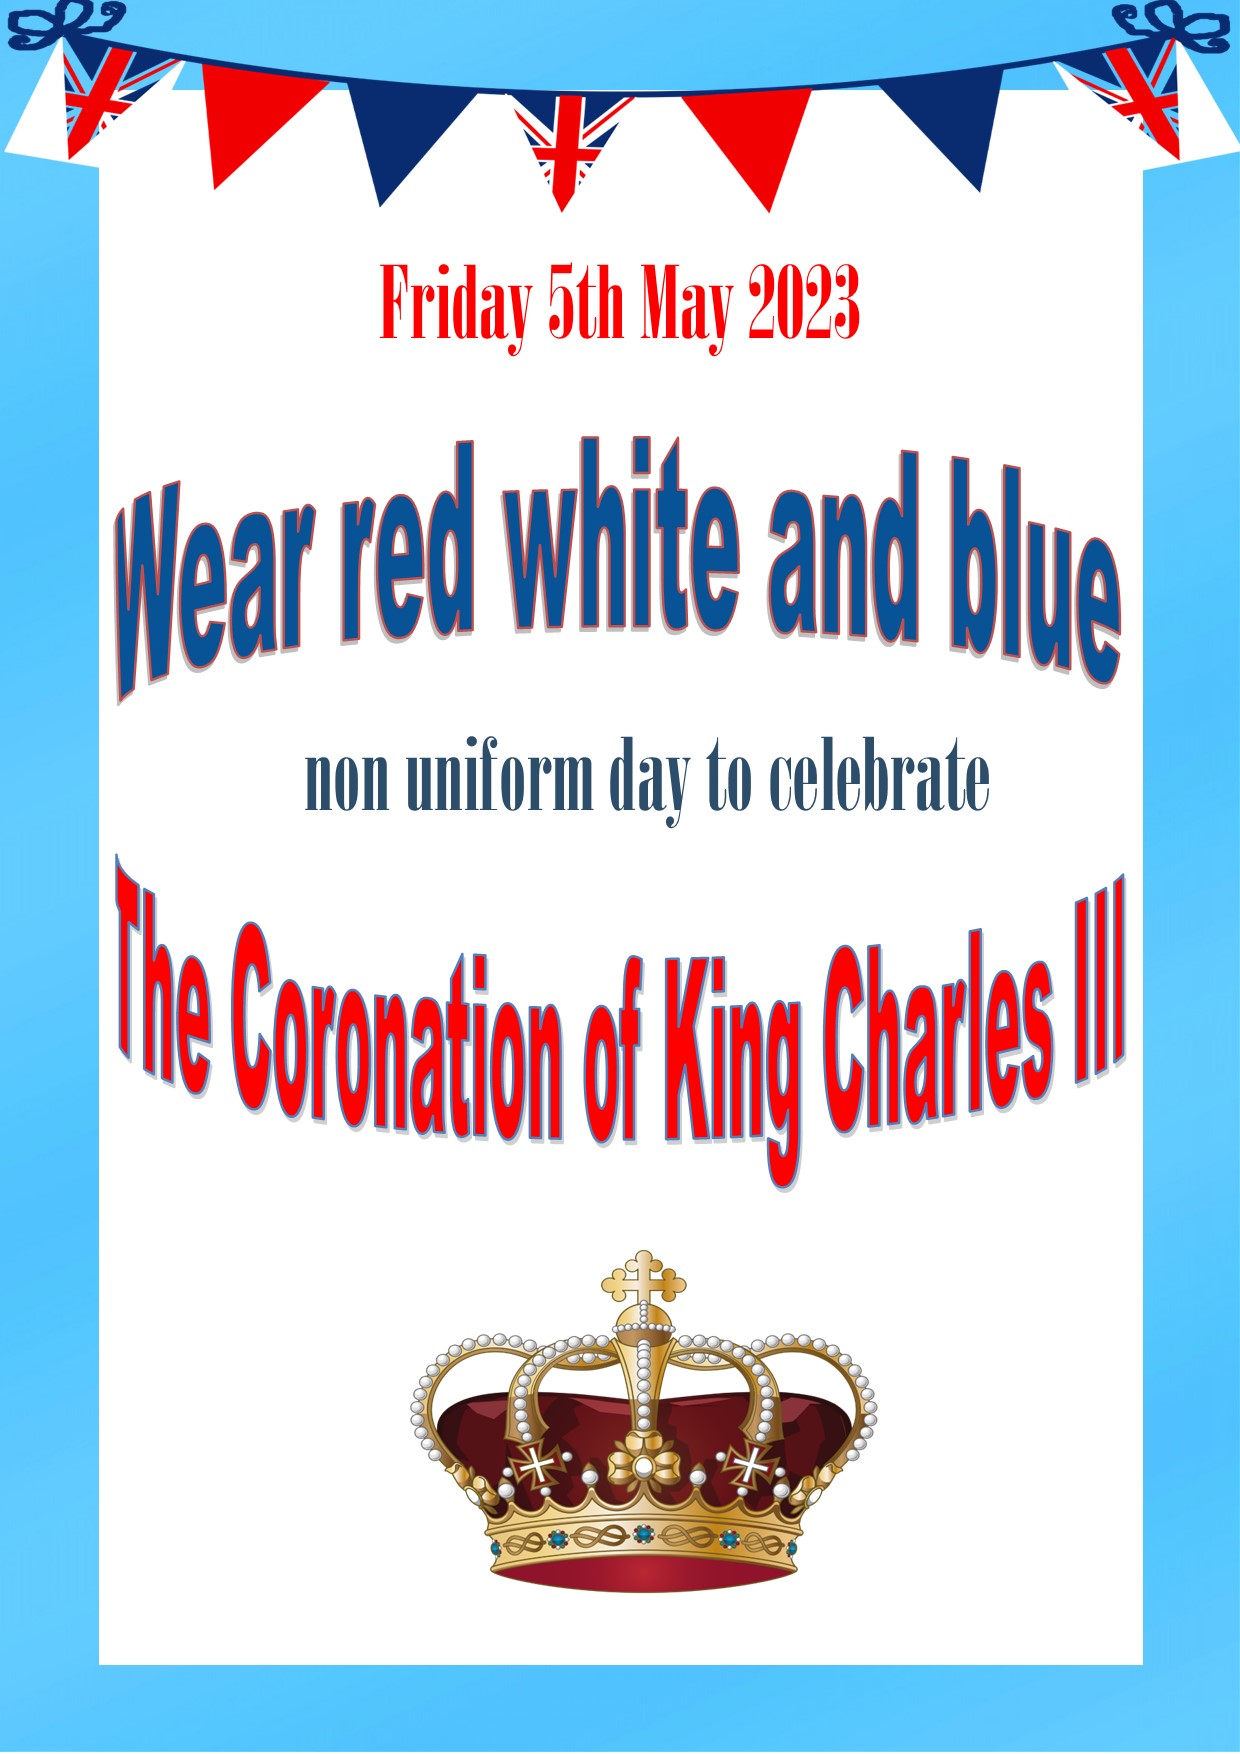 Kings Coronation Celebrations Non uniform day 05.05.23